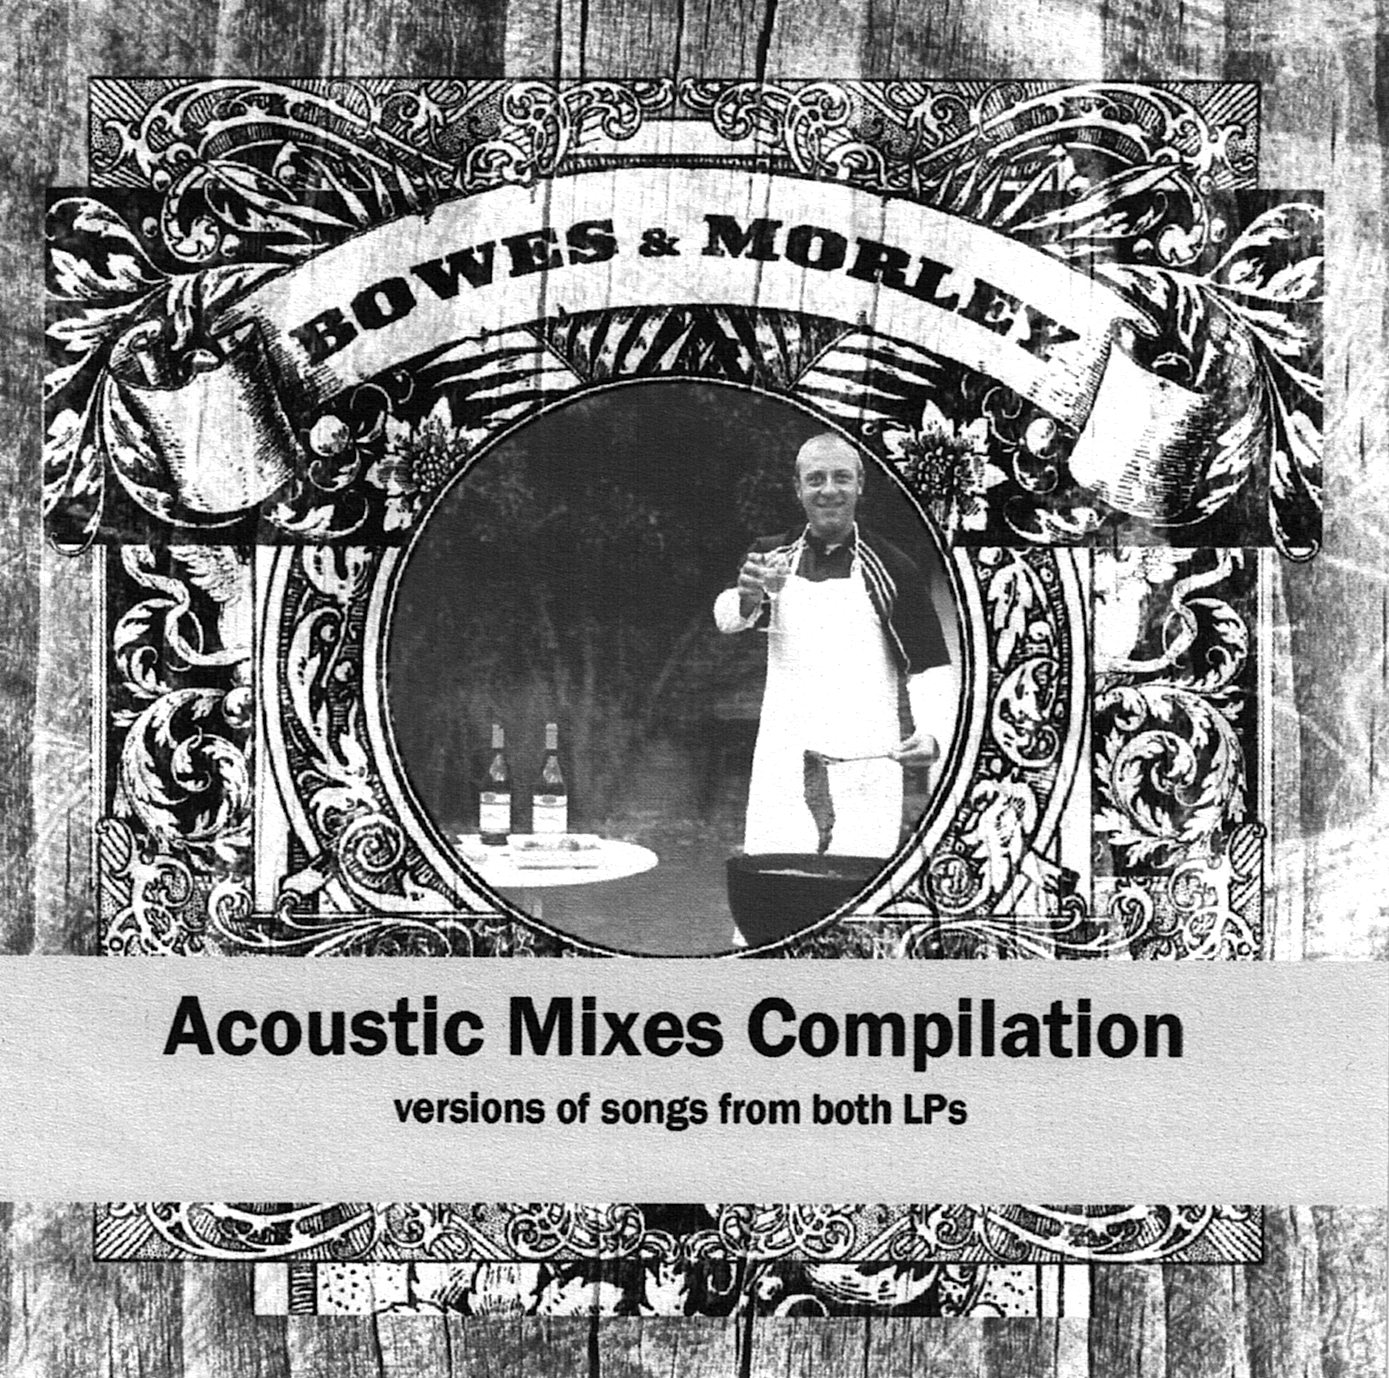 The Acoustic Mixes Compilation - Bowes & Morley (Digital Album)